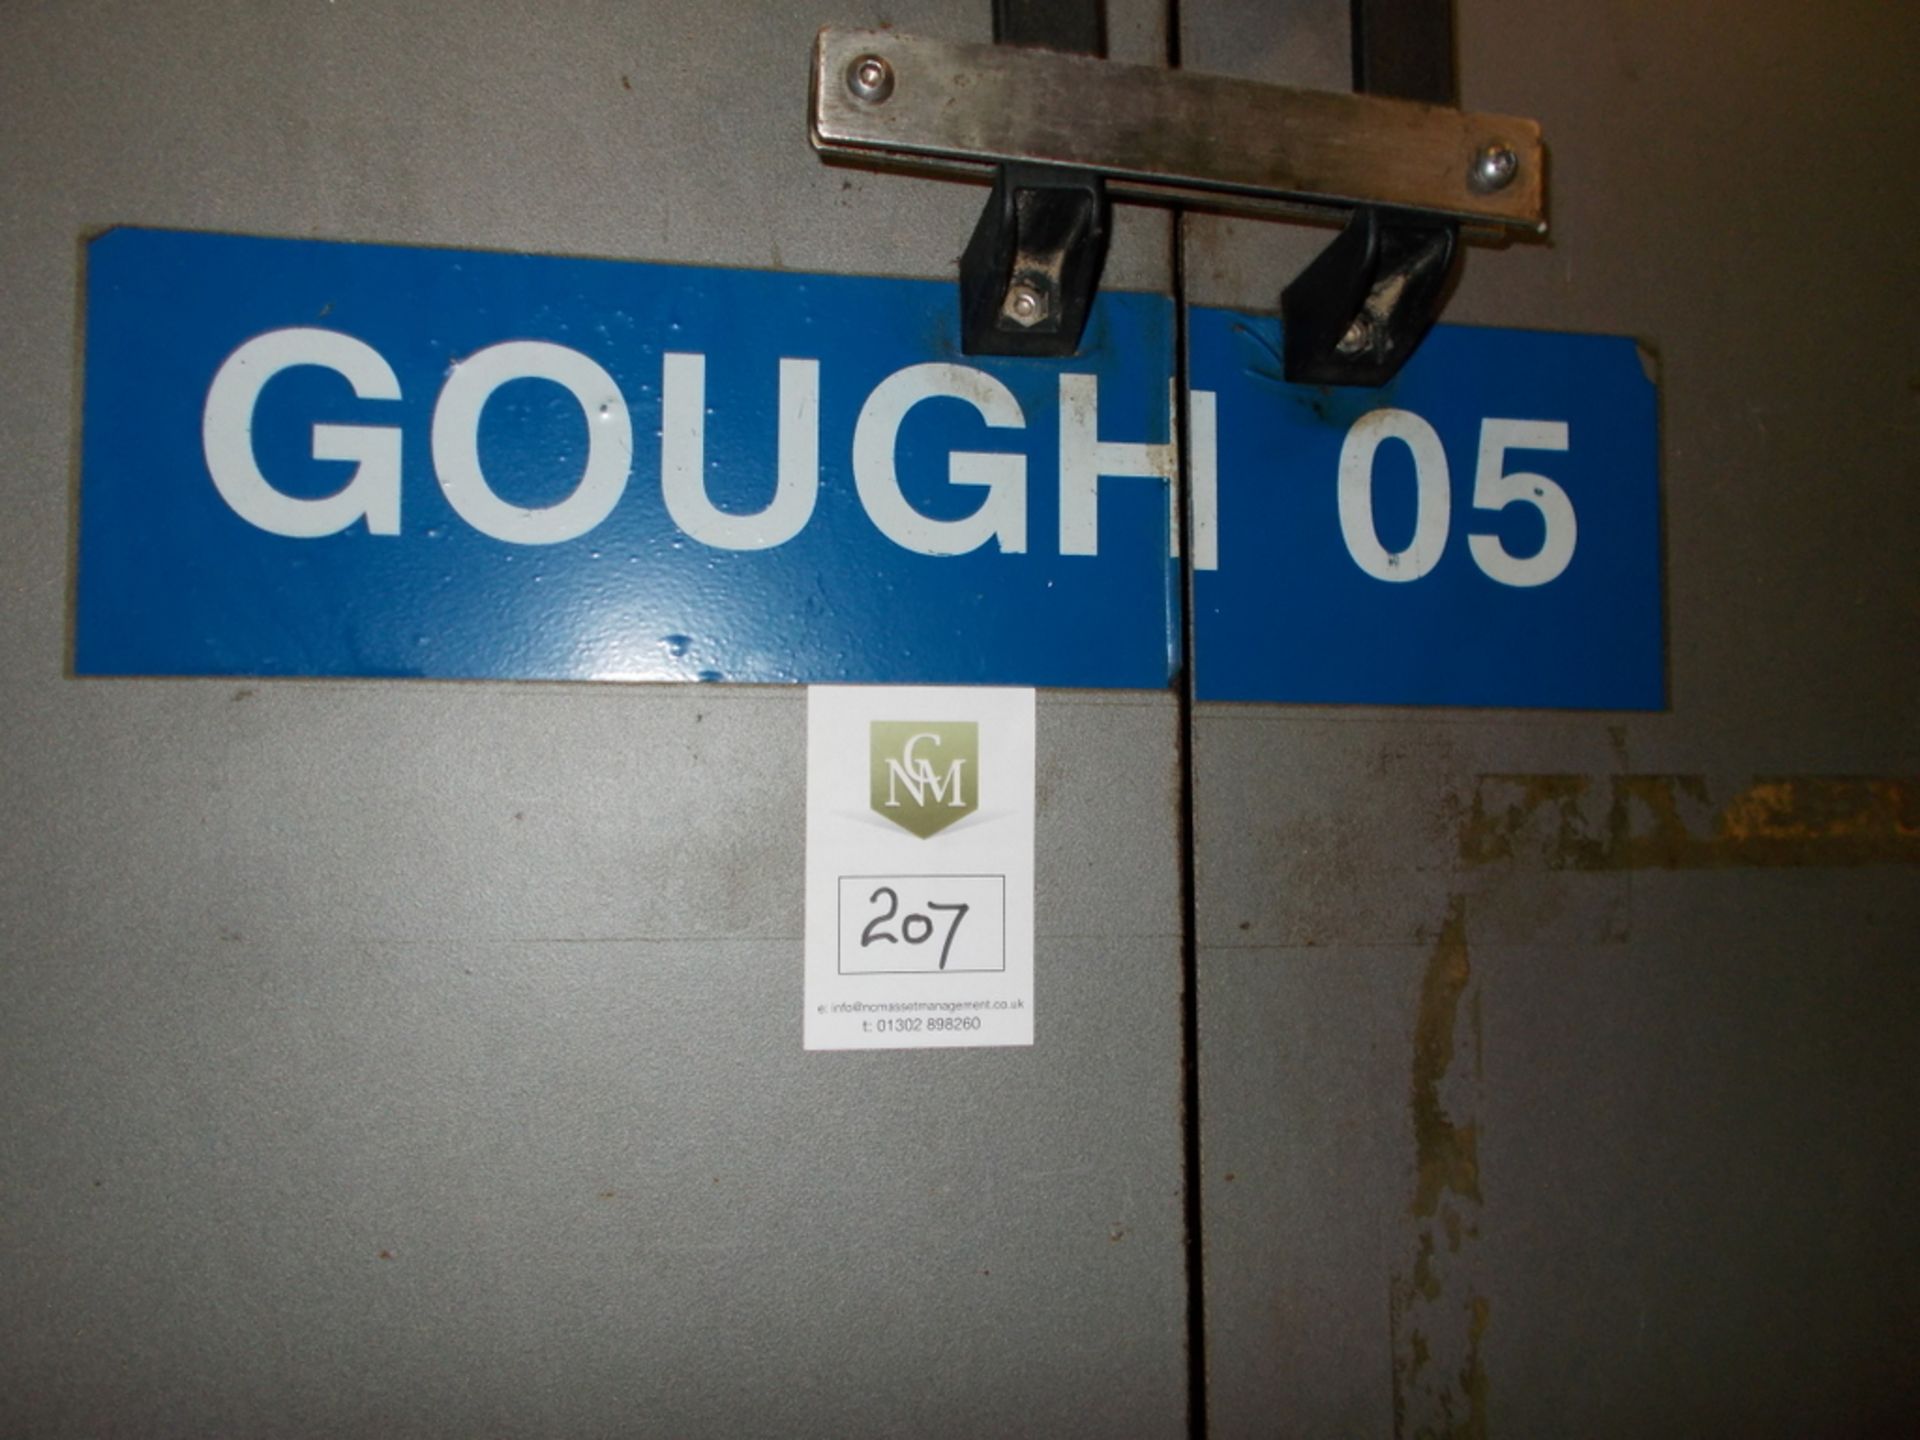 Gough bucket elevator - Image 4 of 4